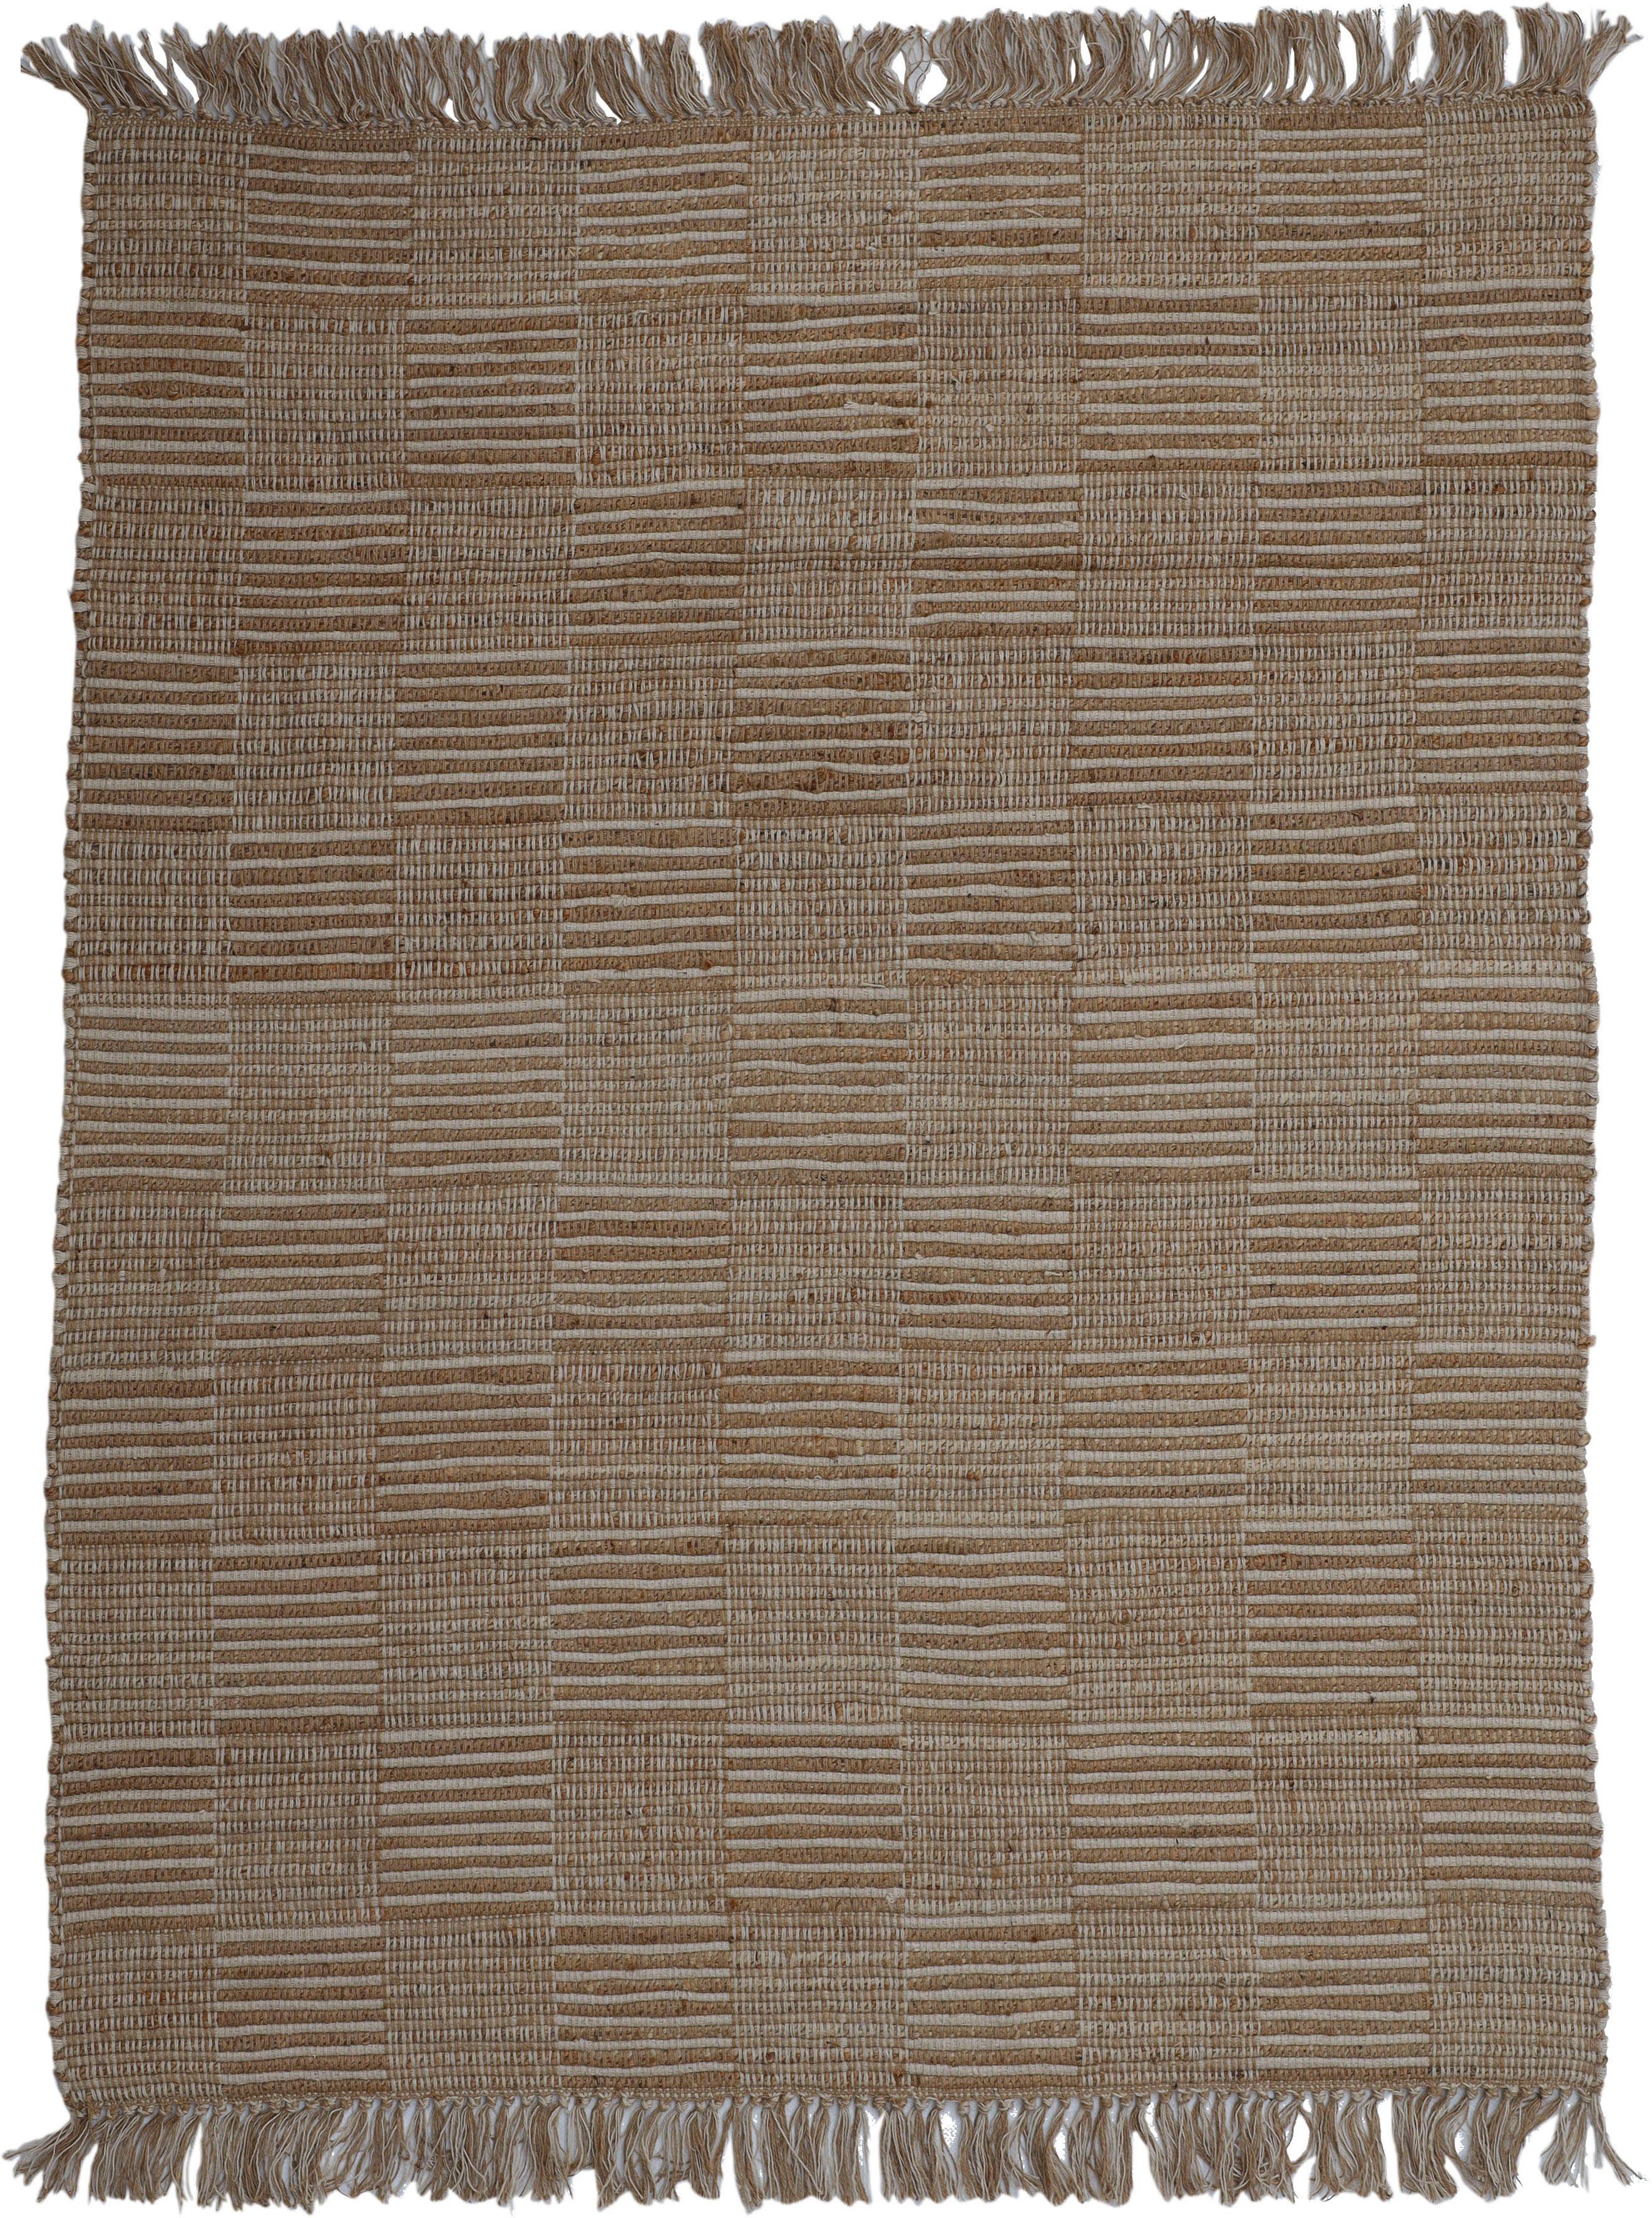 Karo-Muster aus Himal, Geflochtener 100% Jute, Home rechteckig, Teppich Höhe: Naturprodukt 7 mm, affaire, Teppich,